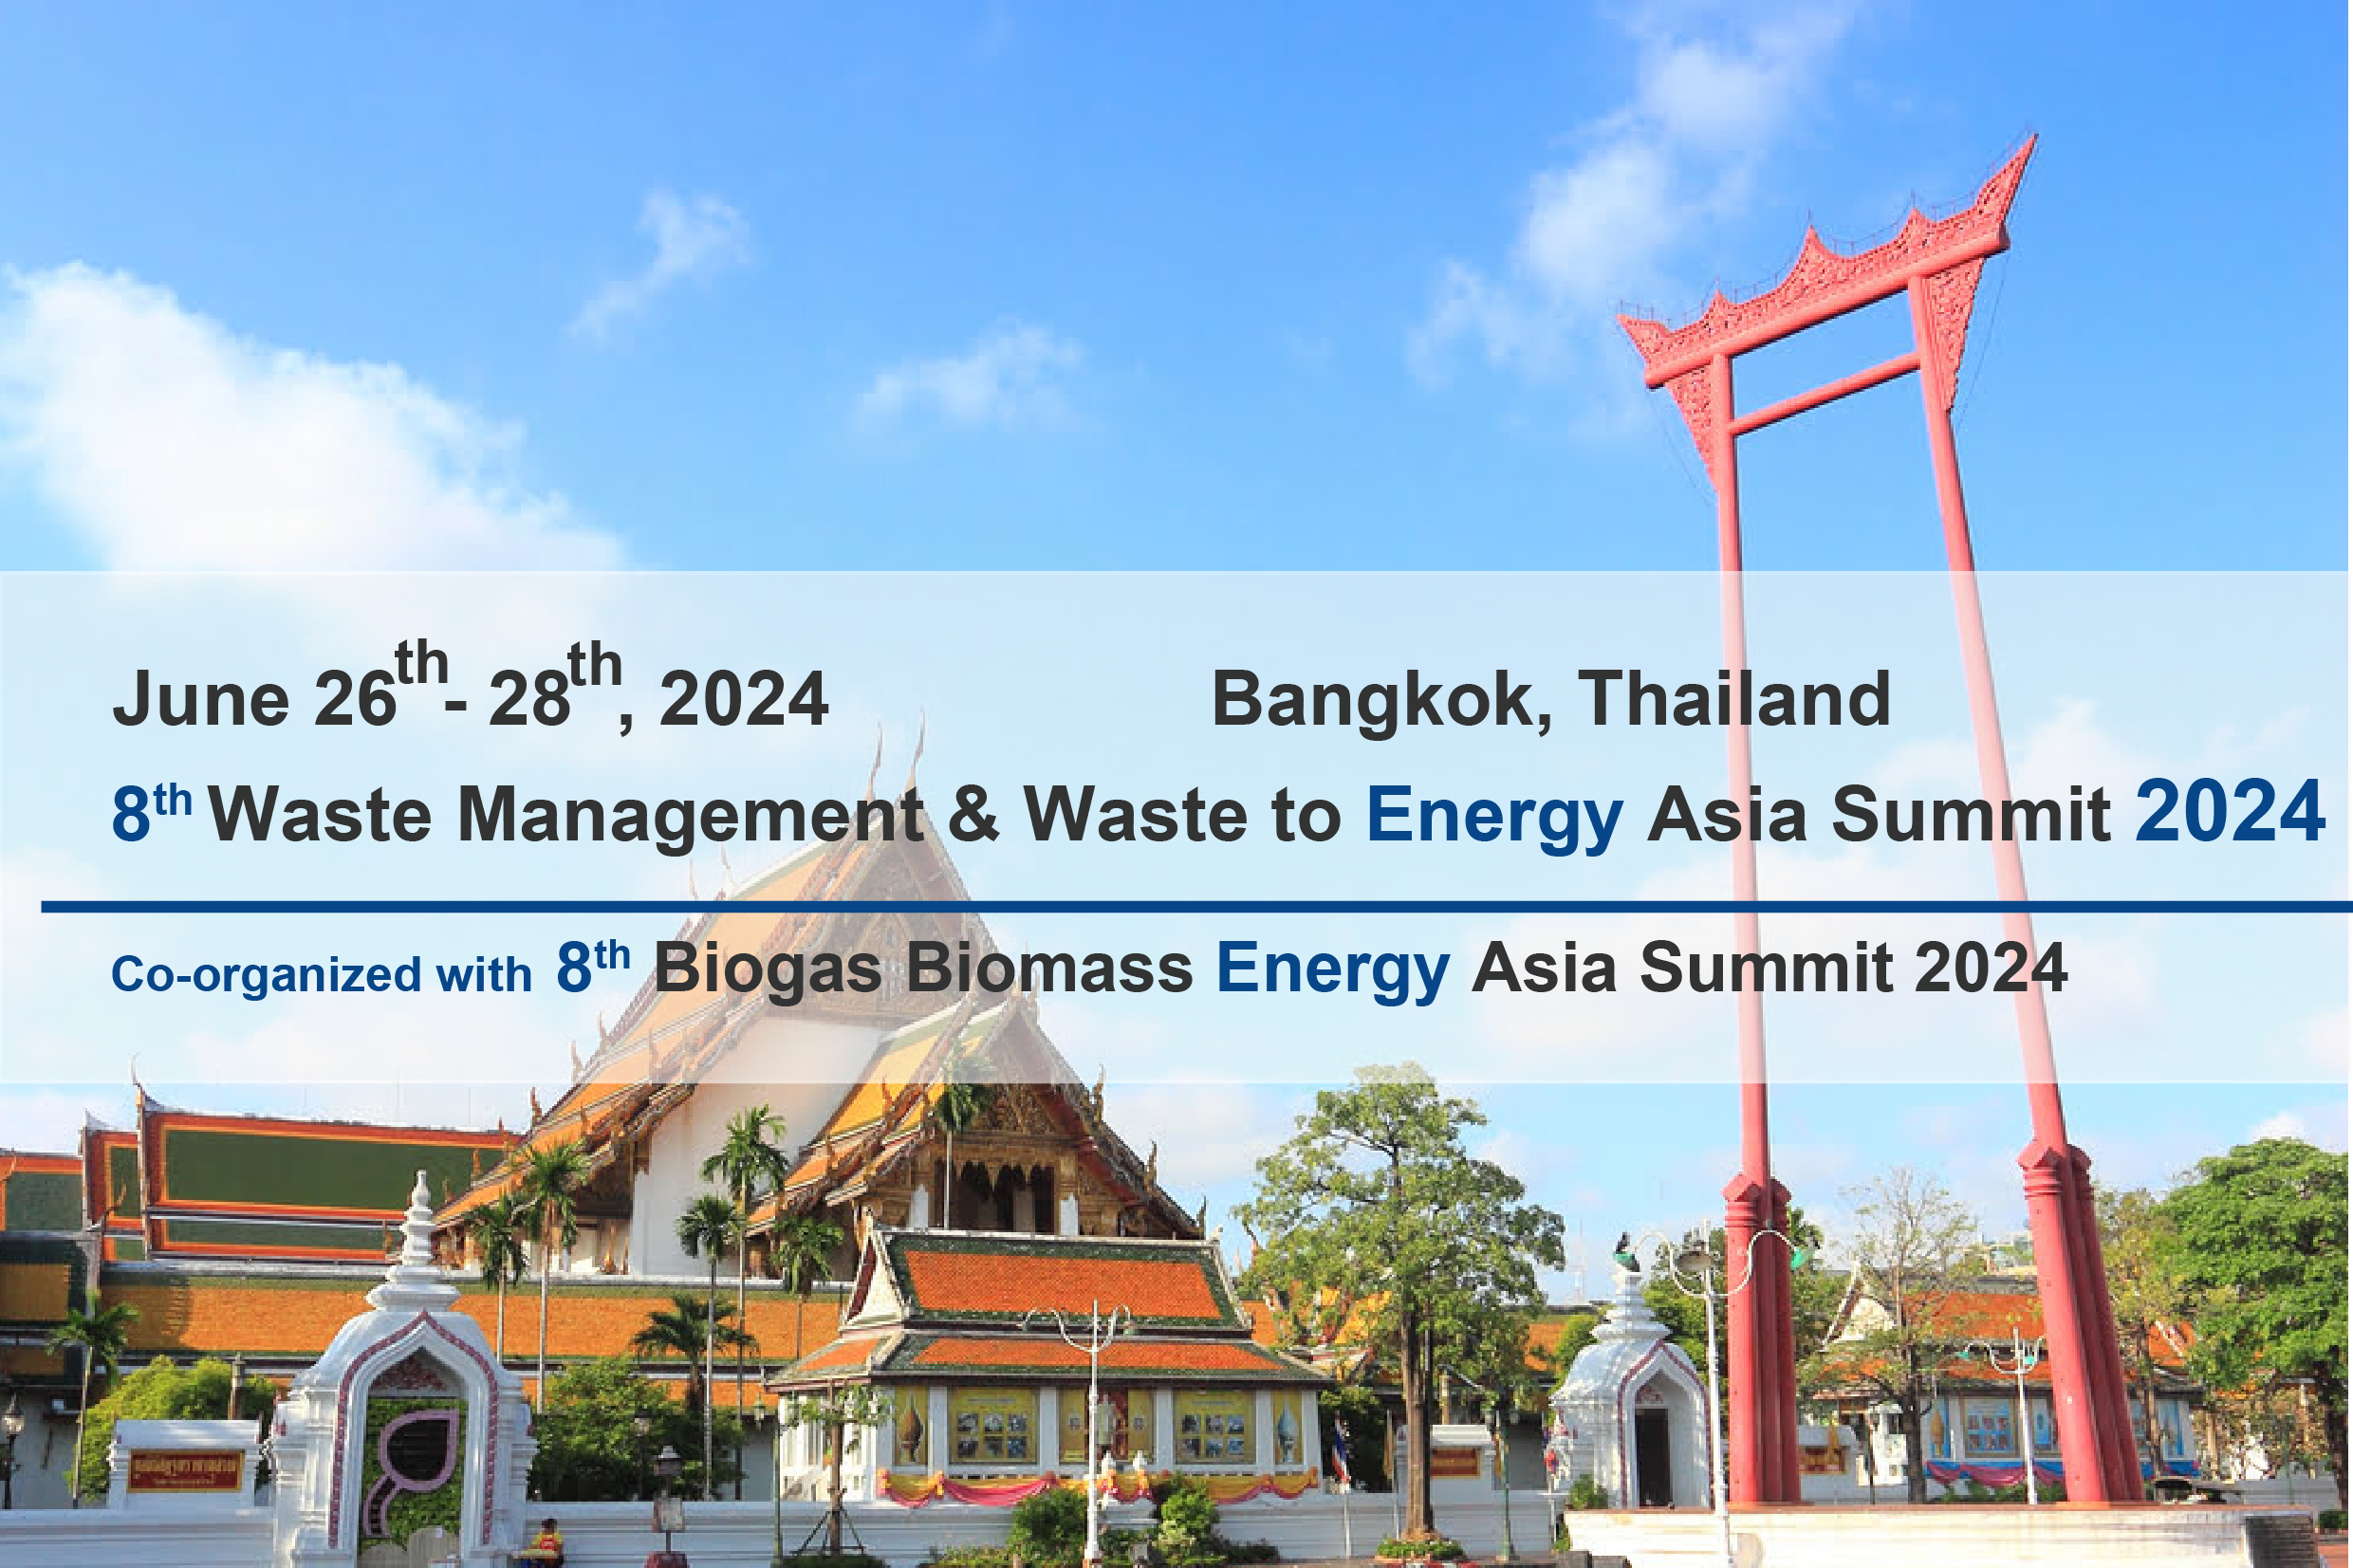 Waste to Energy Asia Summit 2024 Thailand Focus